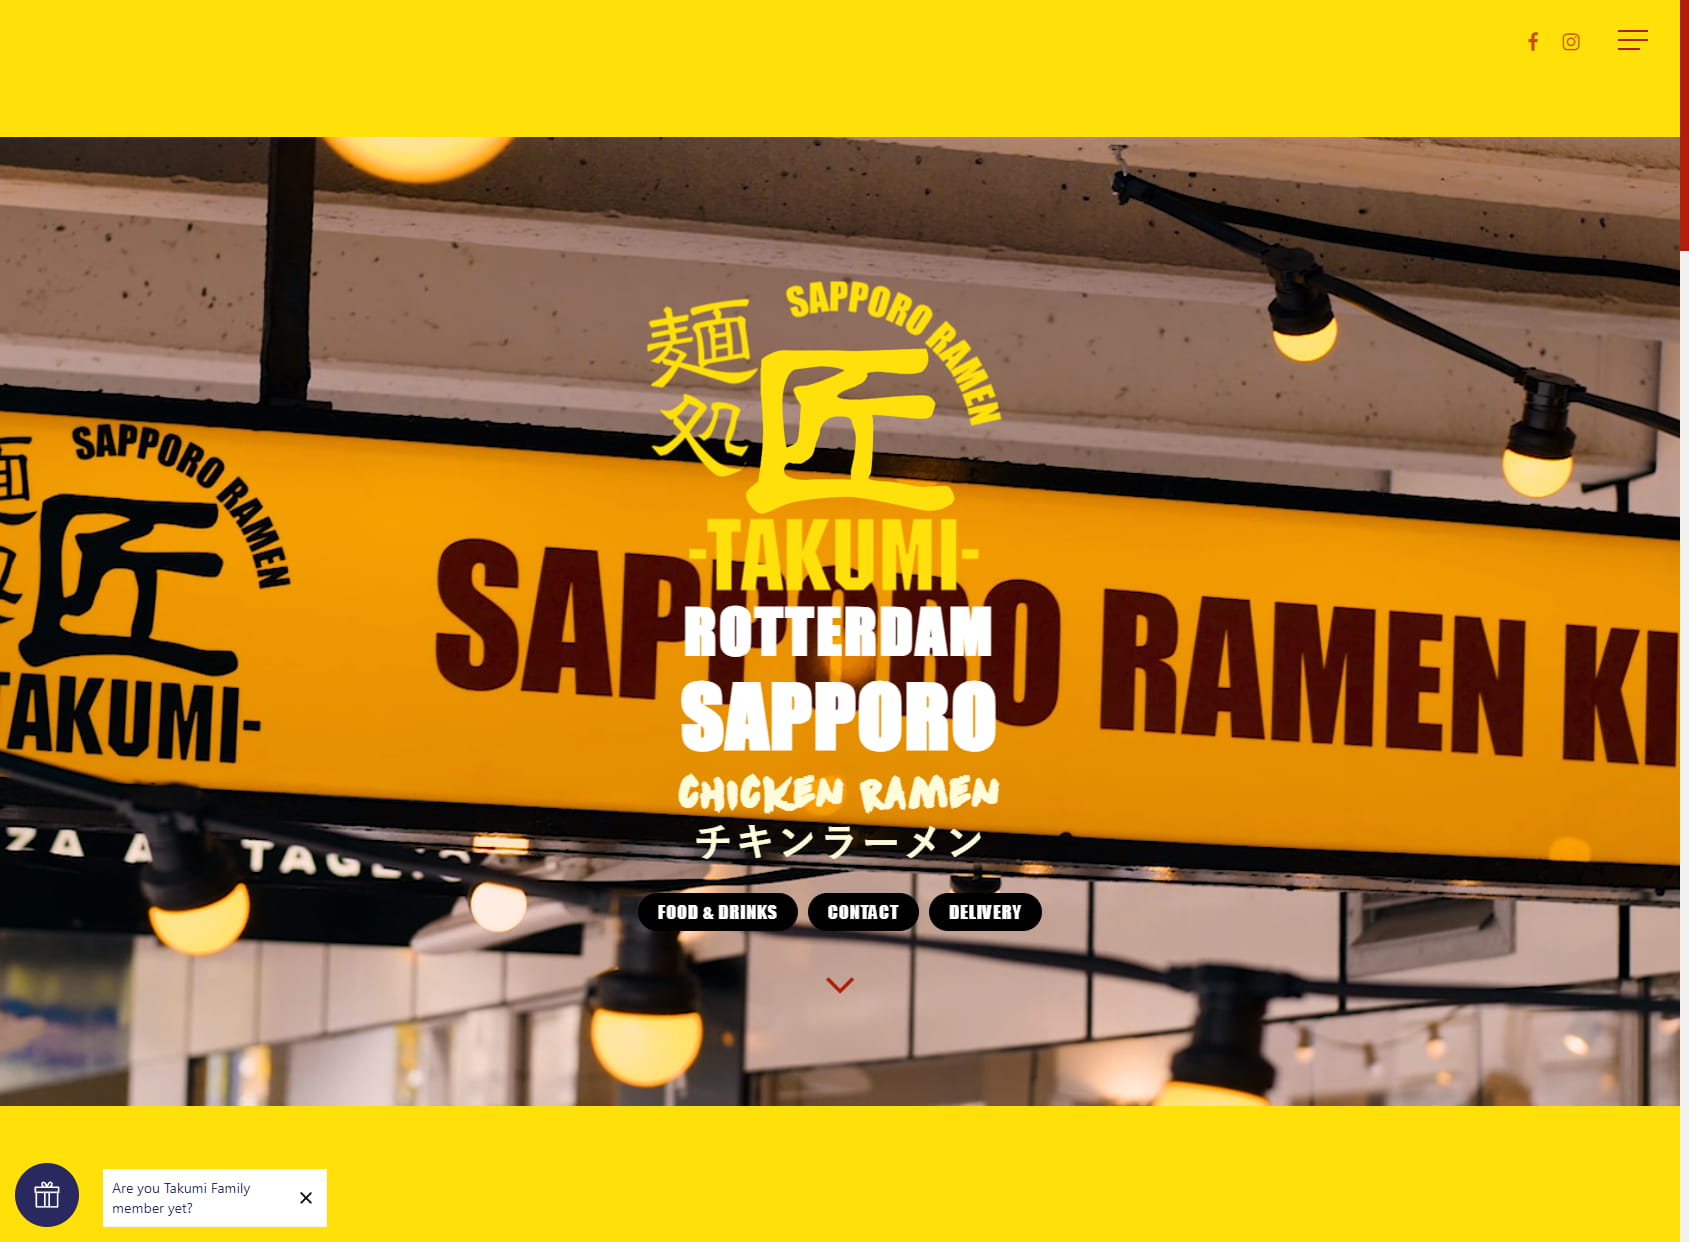 Sapporo Ramen Kitchen -Takumi-